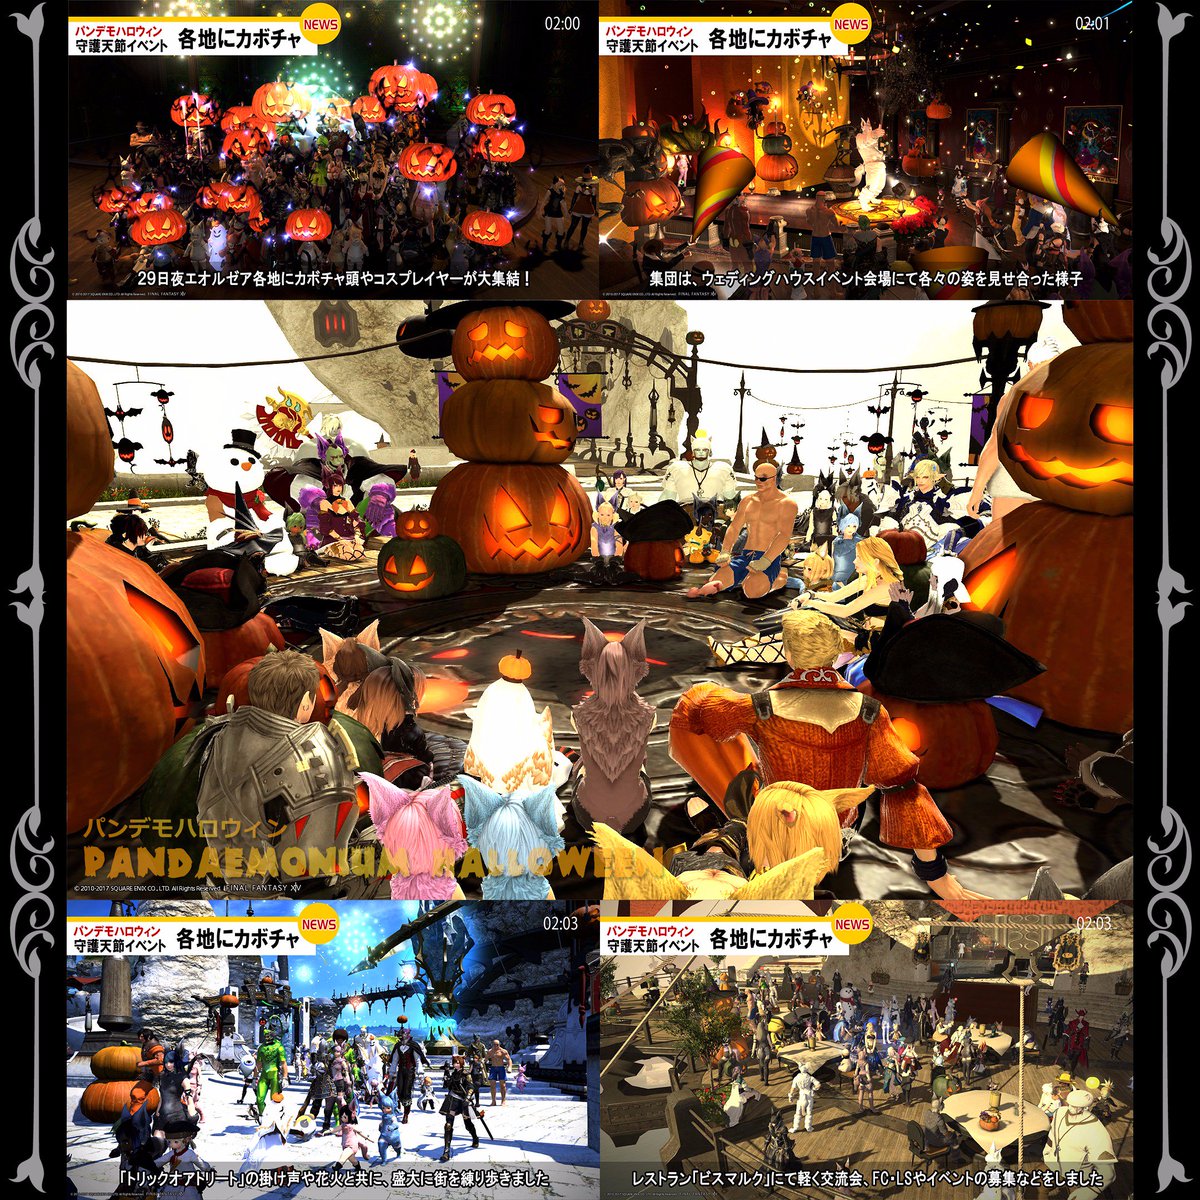 Emi Rose Blog Entry ファッションショー動画アップ 開催レポート ハロウィンファッションショー パレート 撮影ツアー Final Fantasy Xiv The Lodestone